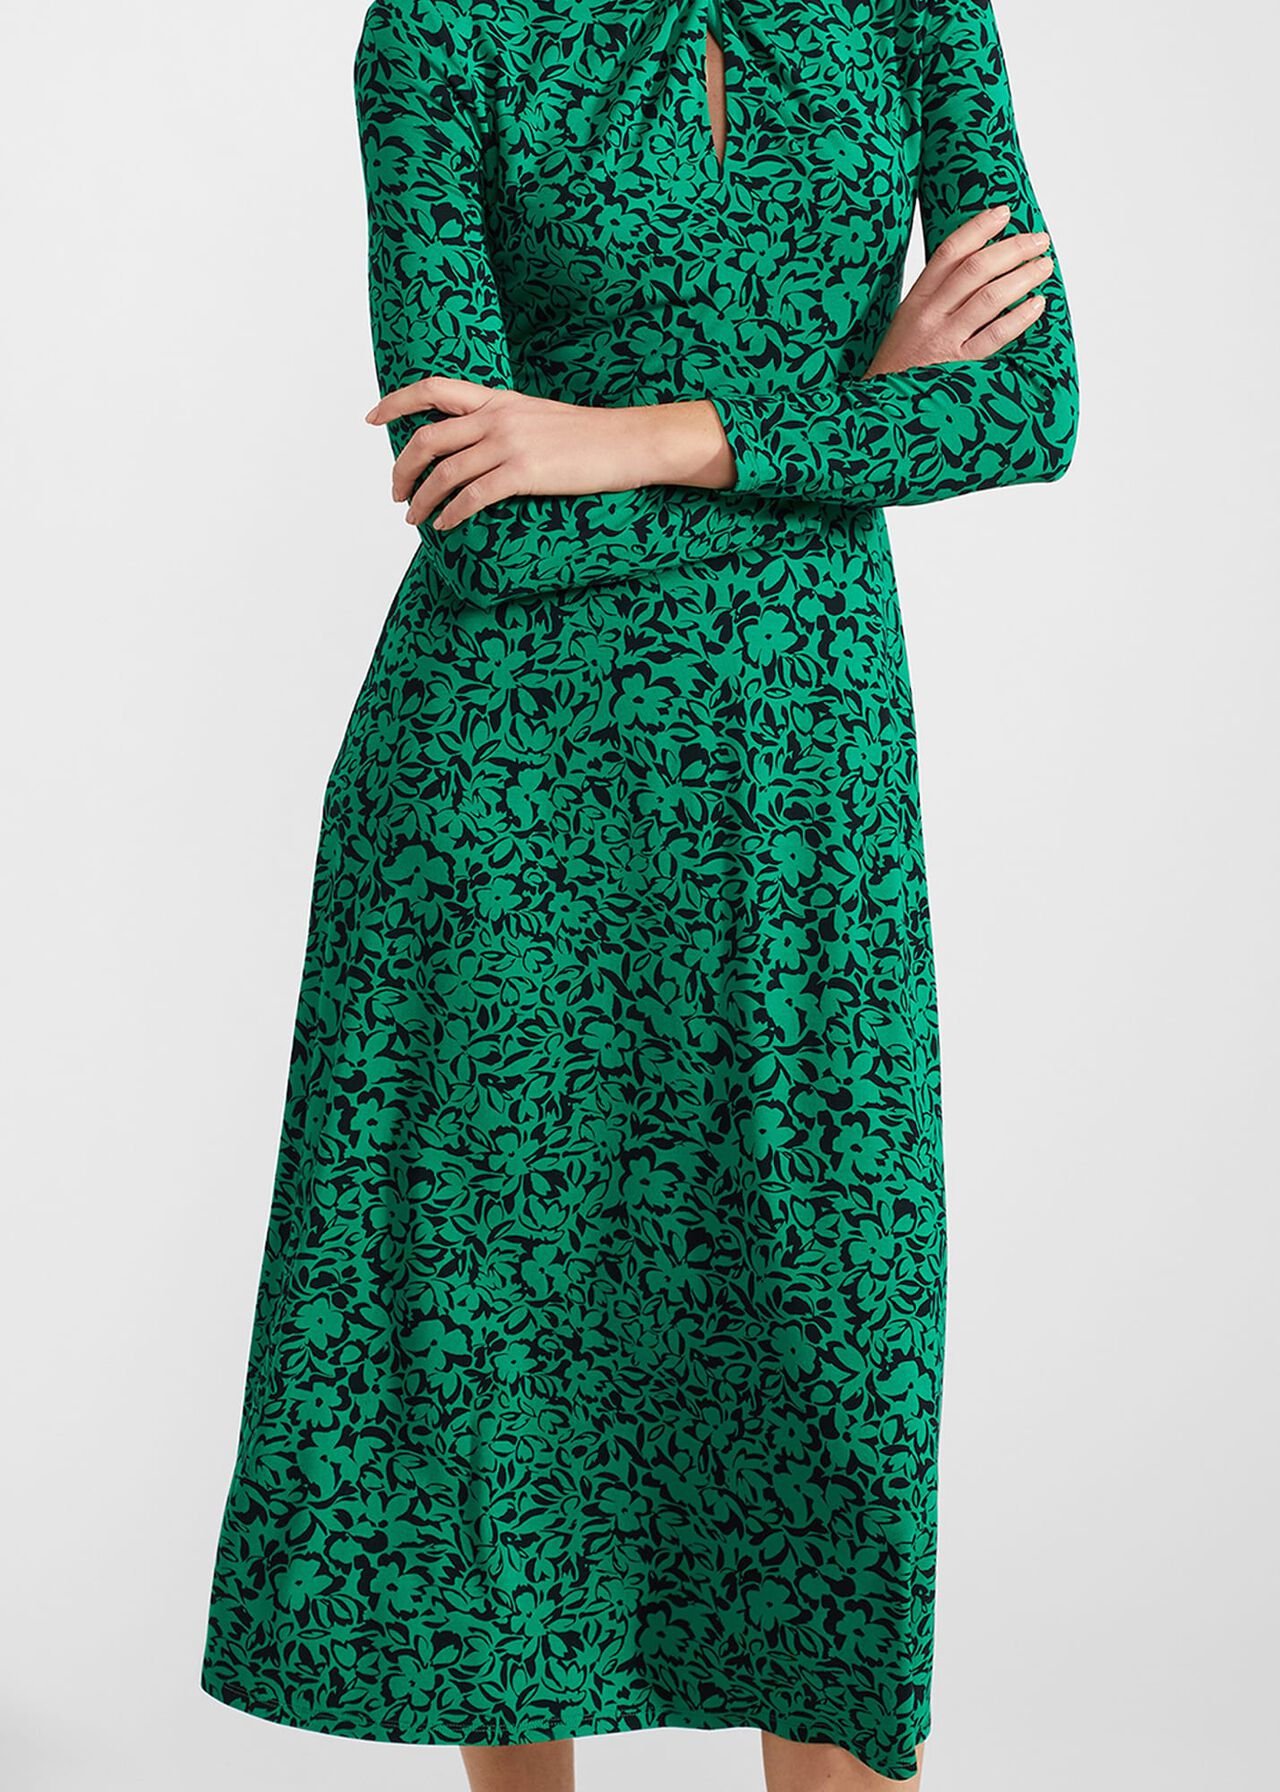 Yasmin Jersey Dress, Green Navy, hi-res